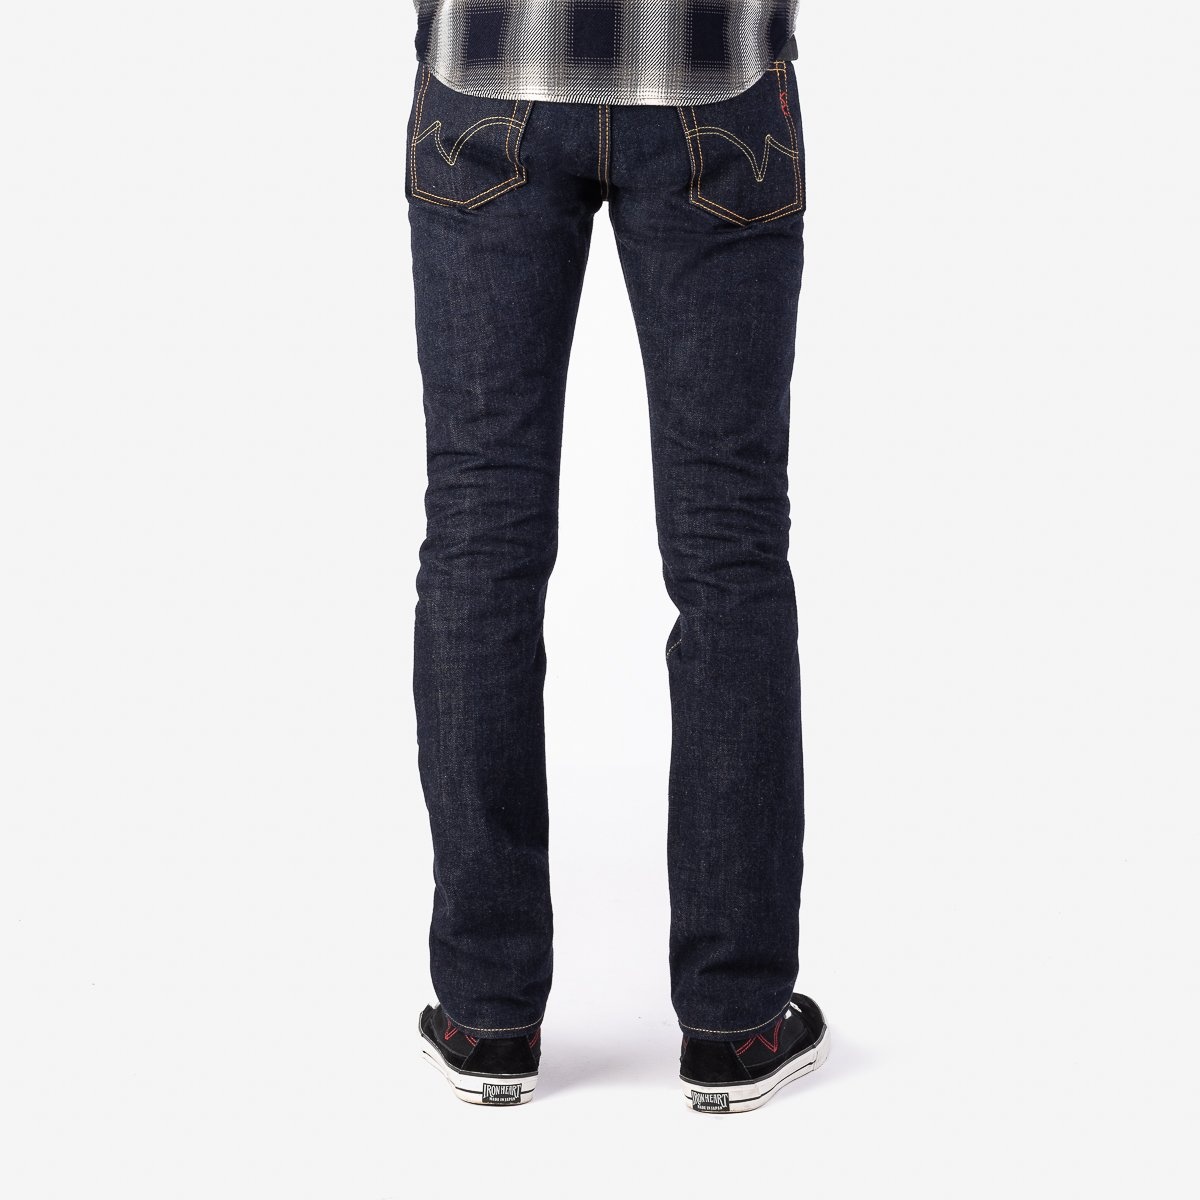 IH-555N 17oz Selvedge Denim Super Slim Cut Jeans - Natural Indigo - 3